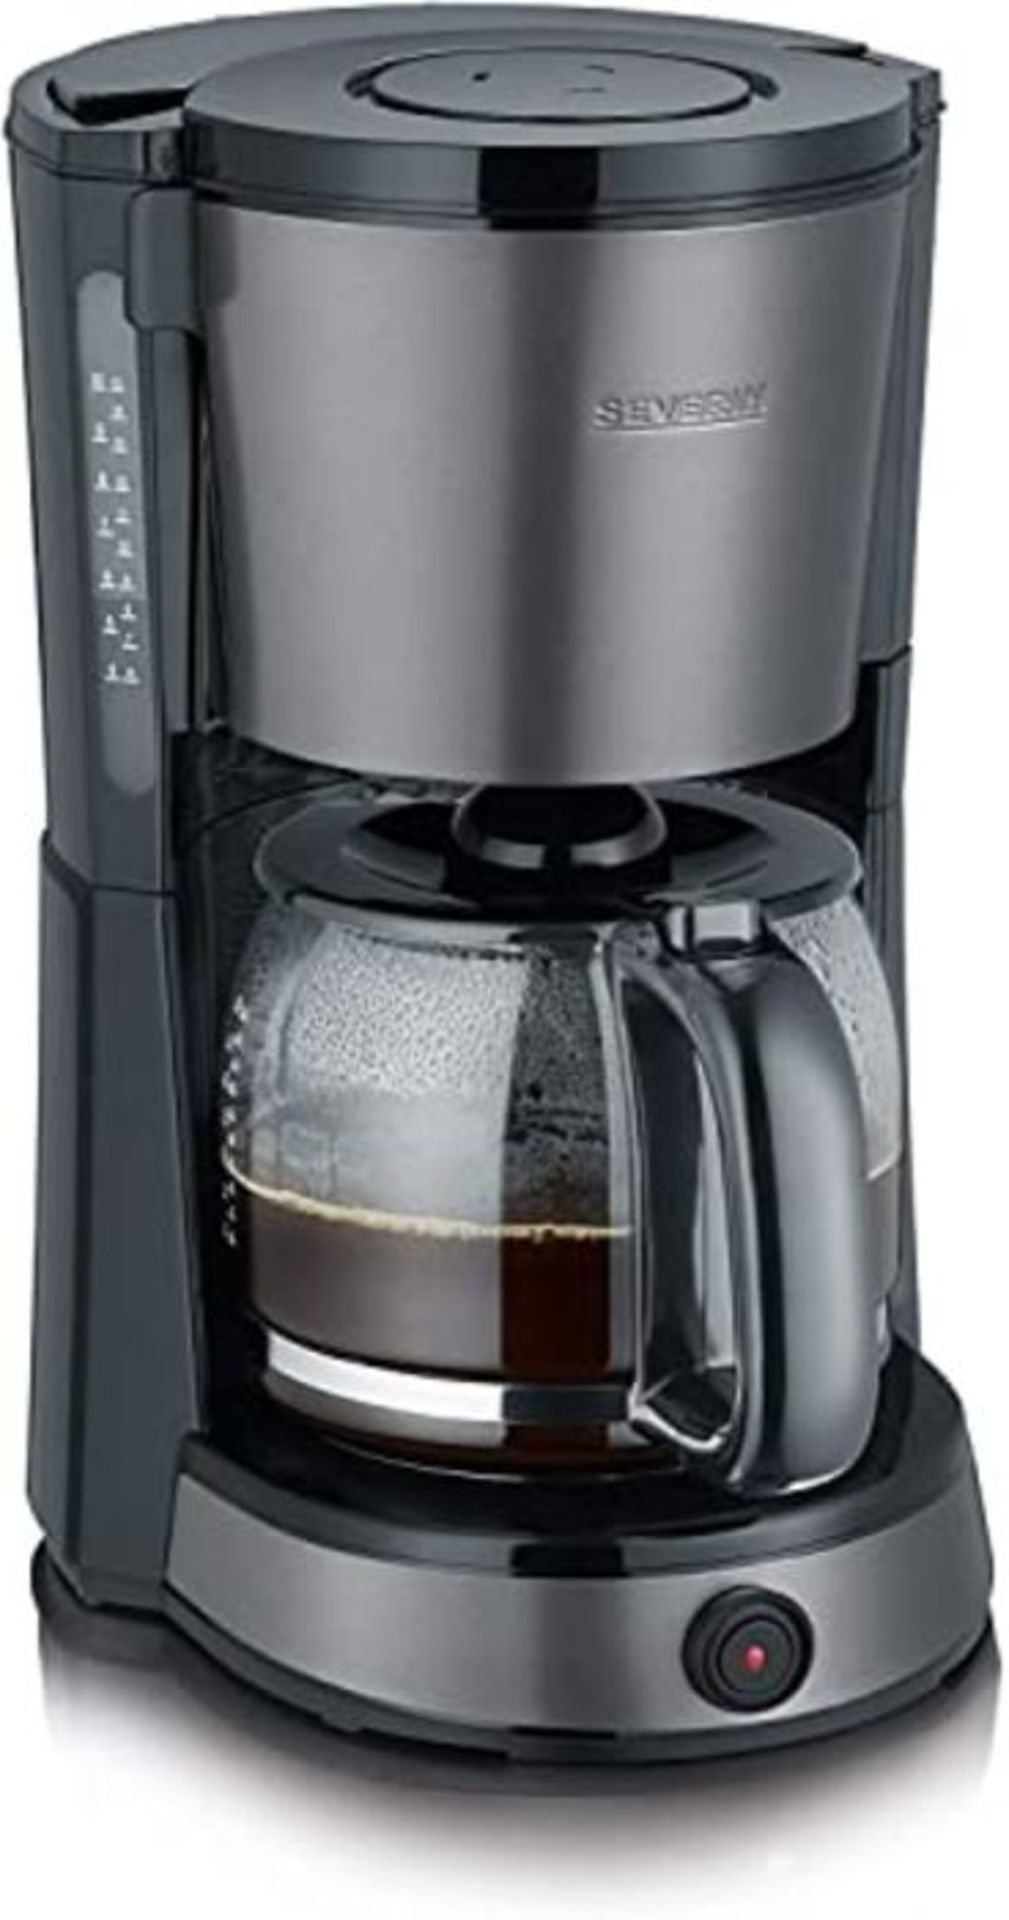 Severin KA 9543 coffee maker Freestanding Drip coffee maker Black, Grey, Metallic 10 c